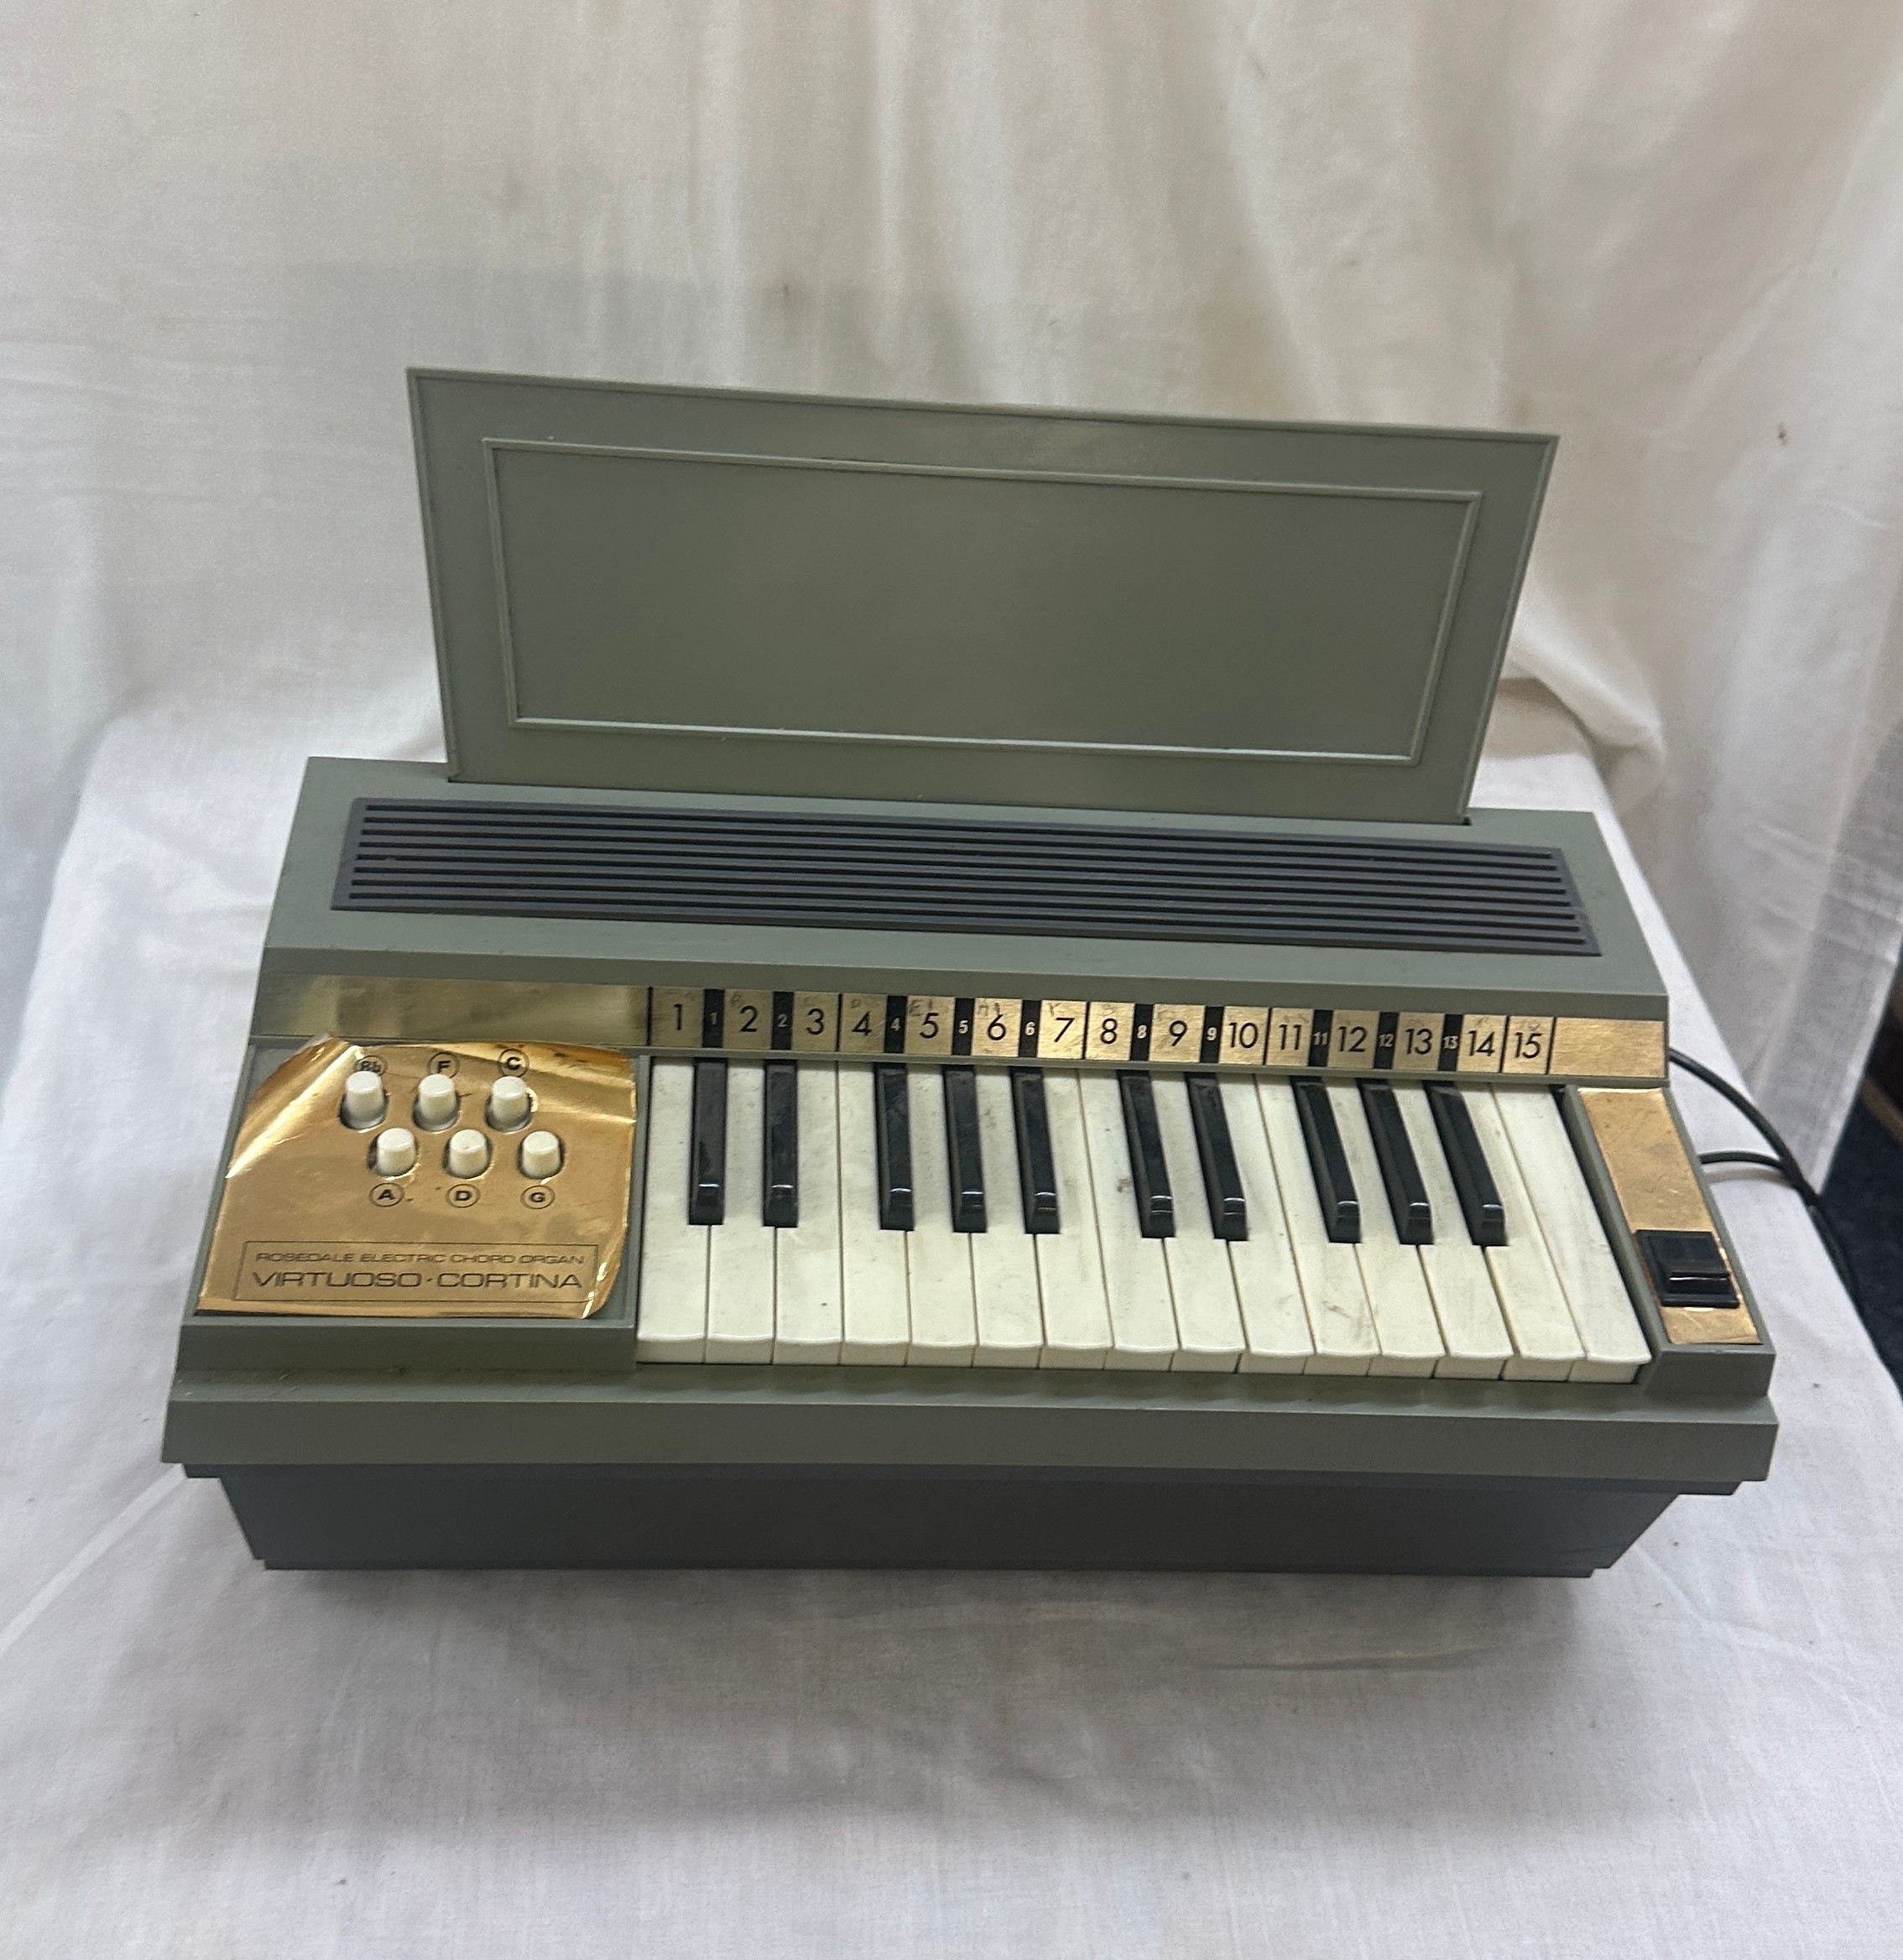 Rosedale electric chord organ - Virtuoso.Cortina - Bild 3 aus 3